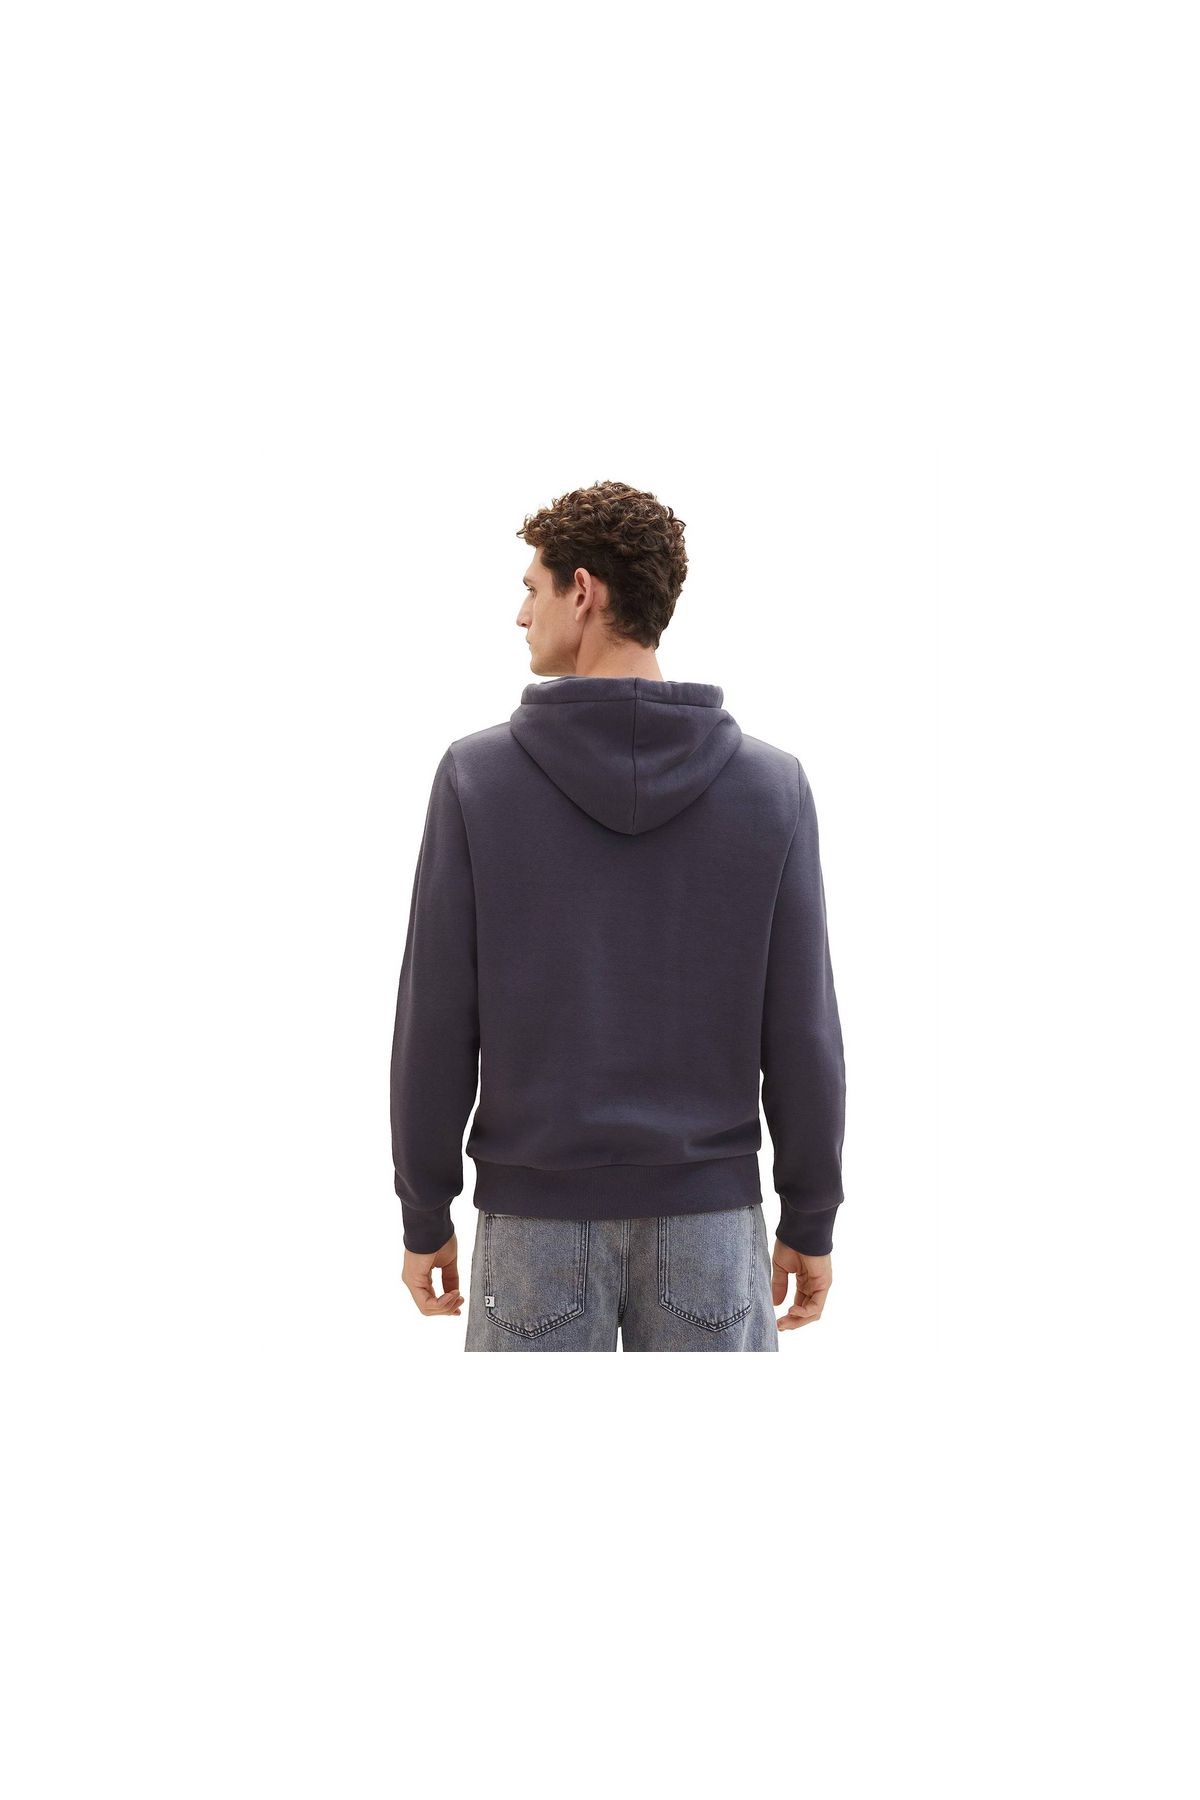 Tom Tailor Sweater - Gray fit - Regular Trendyol 